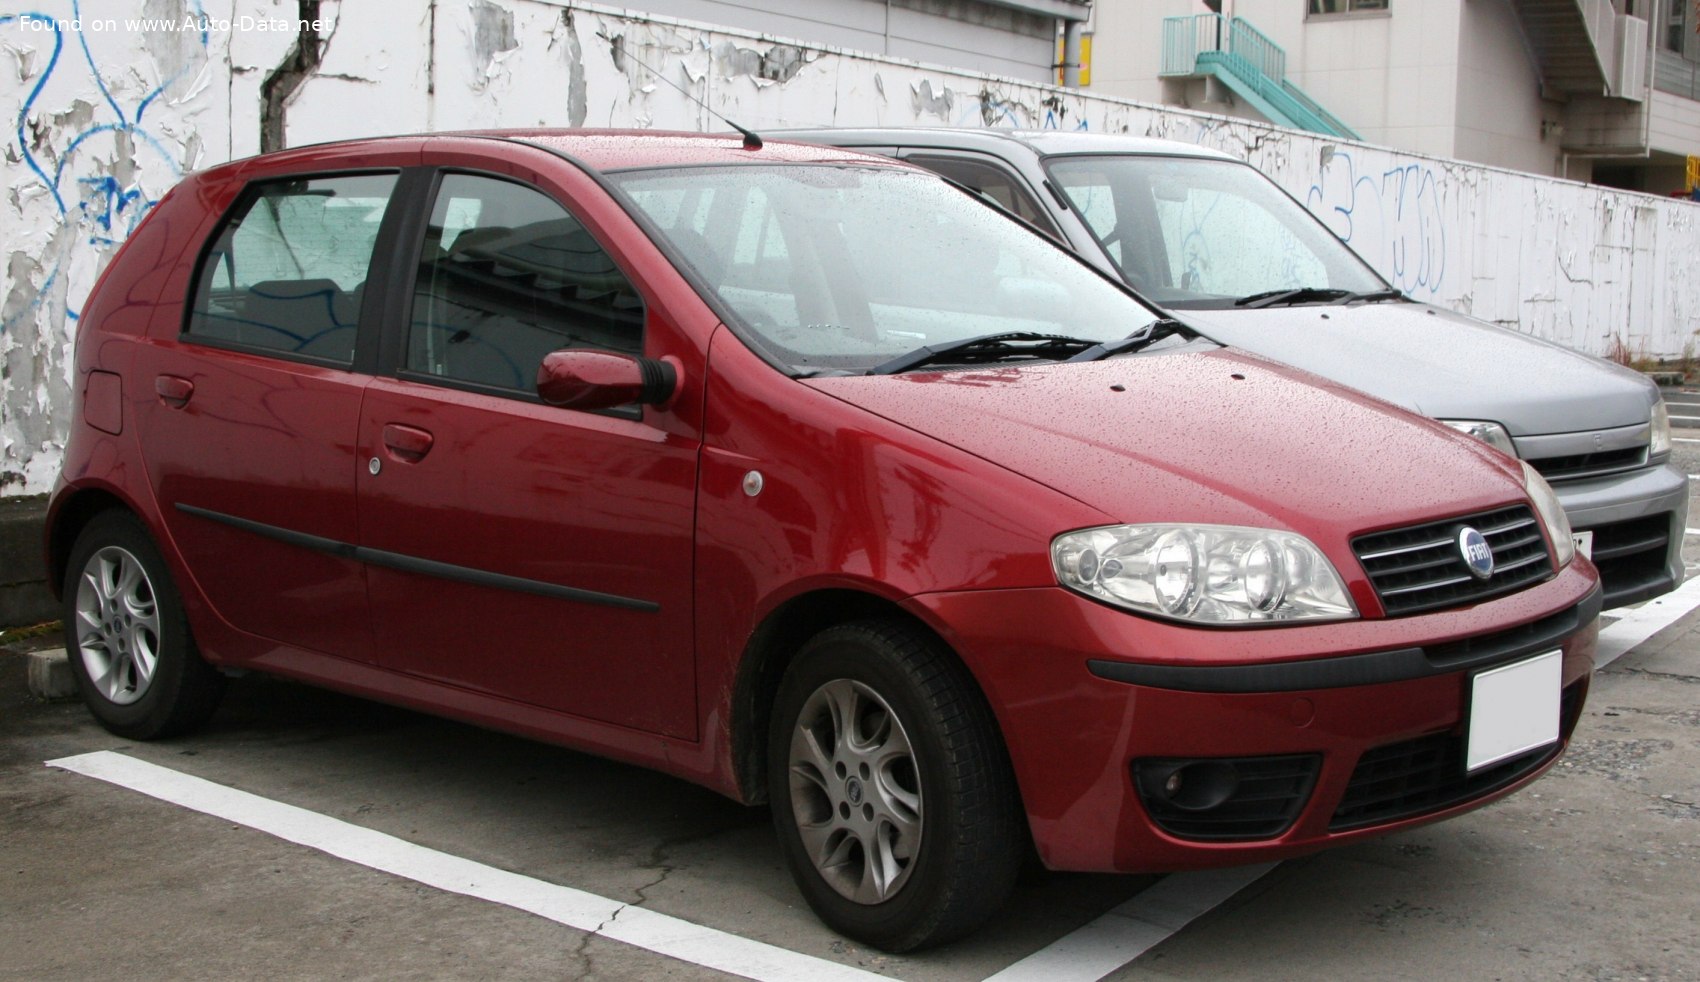 FIAT PUNTO fiat-punto-188-1-2-i-60cv Used - the parking